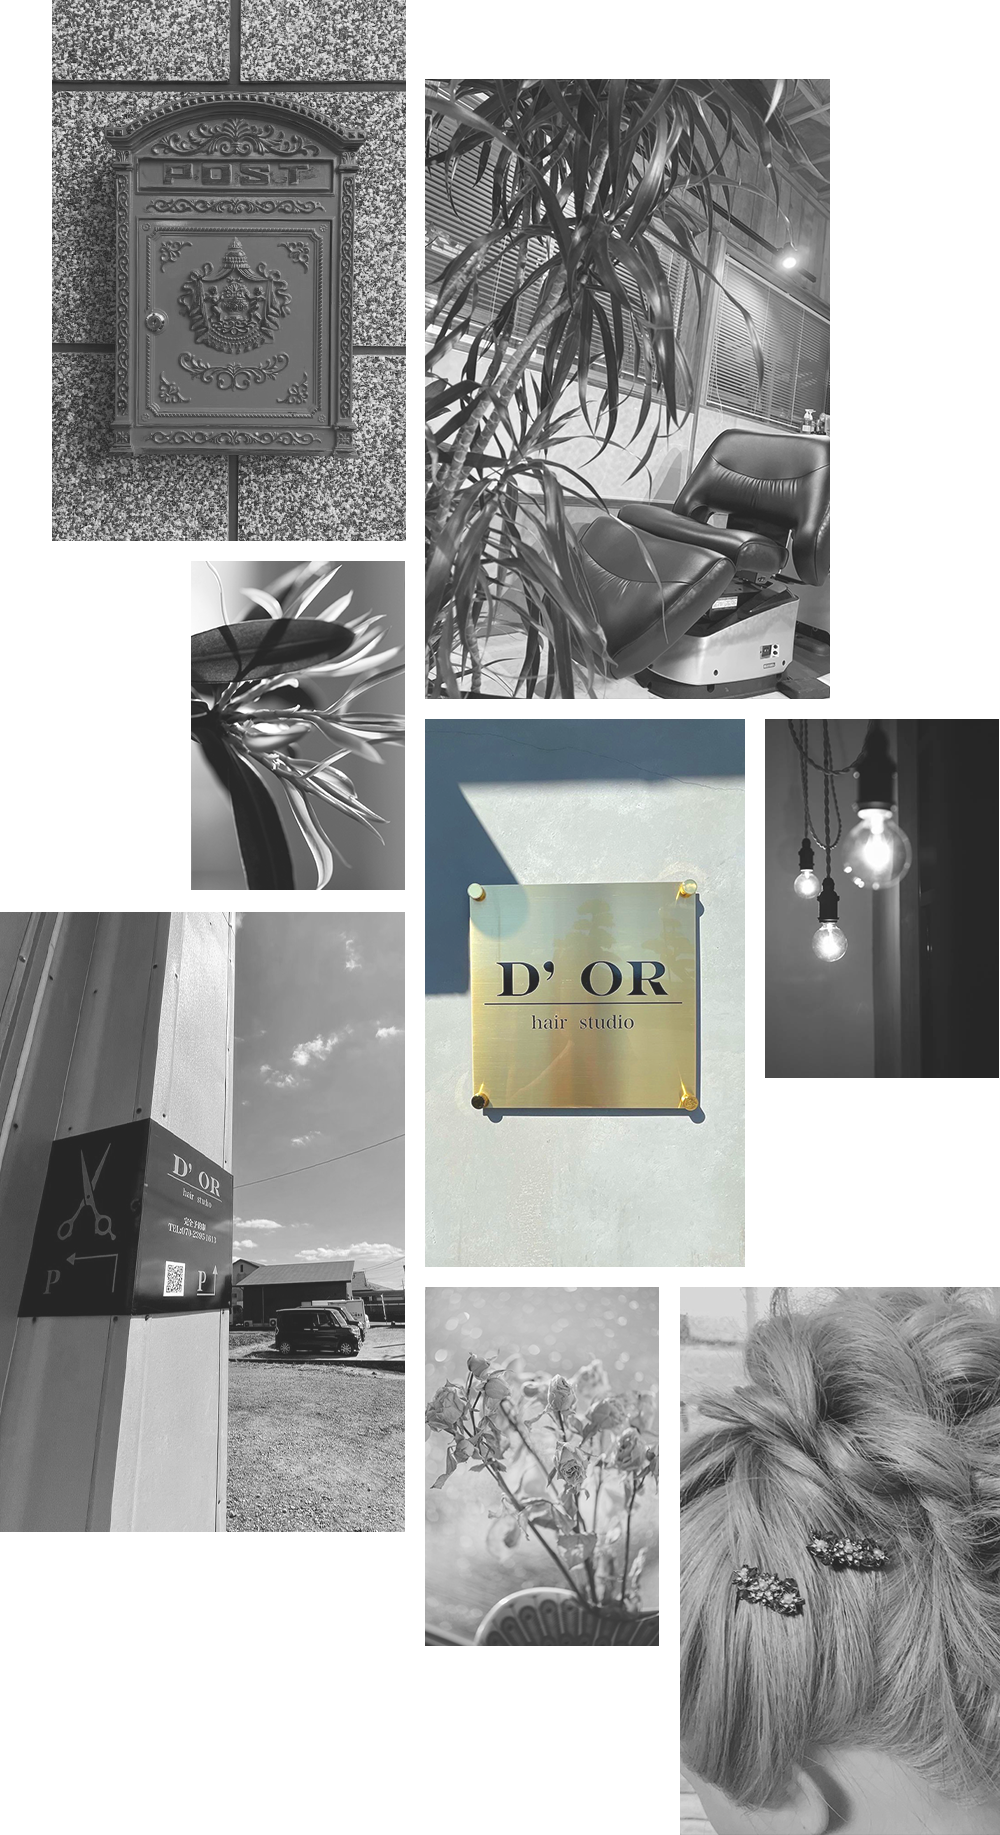 D’OR hair studio